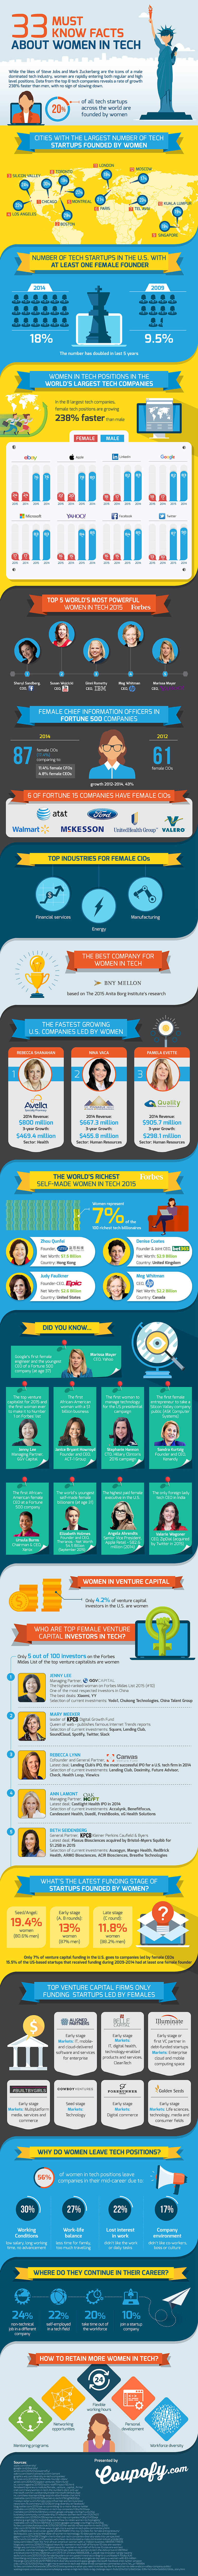 Women in Tech Infographic